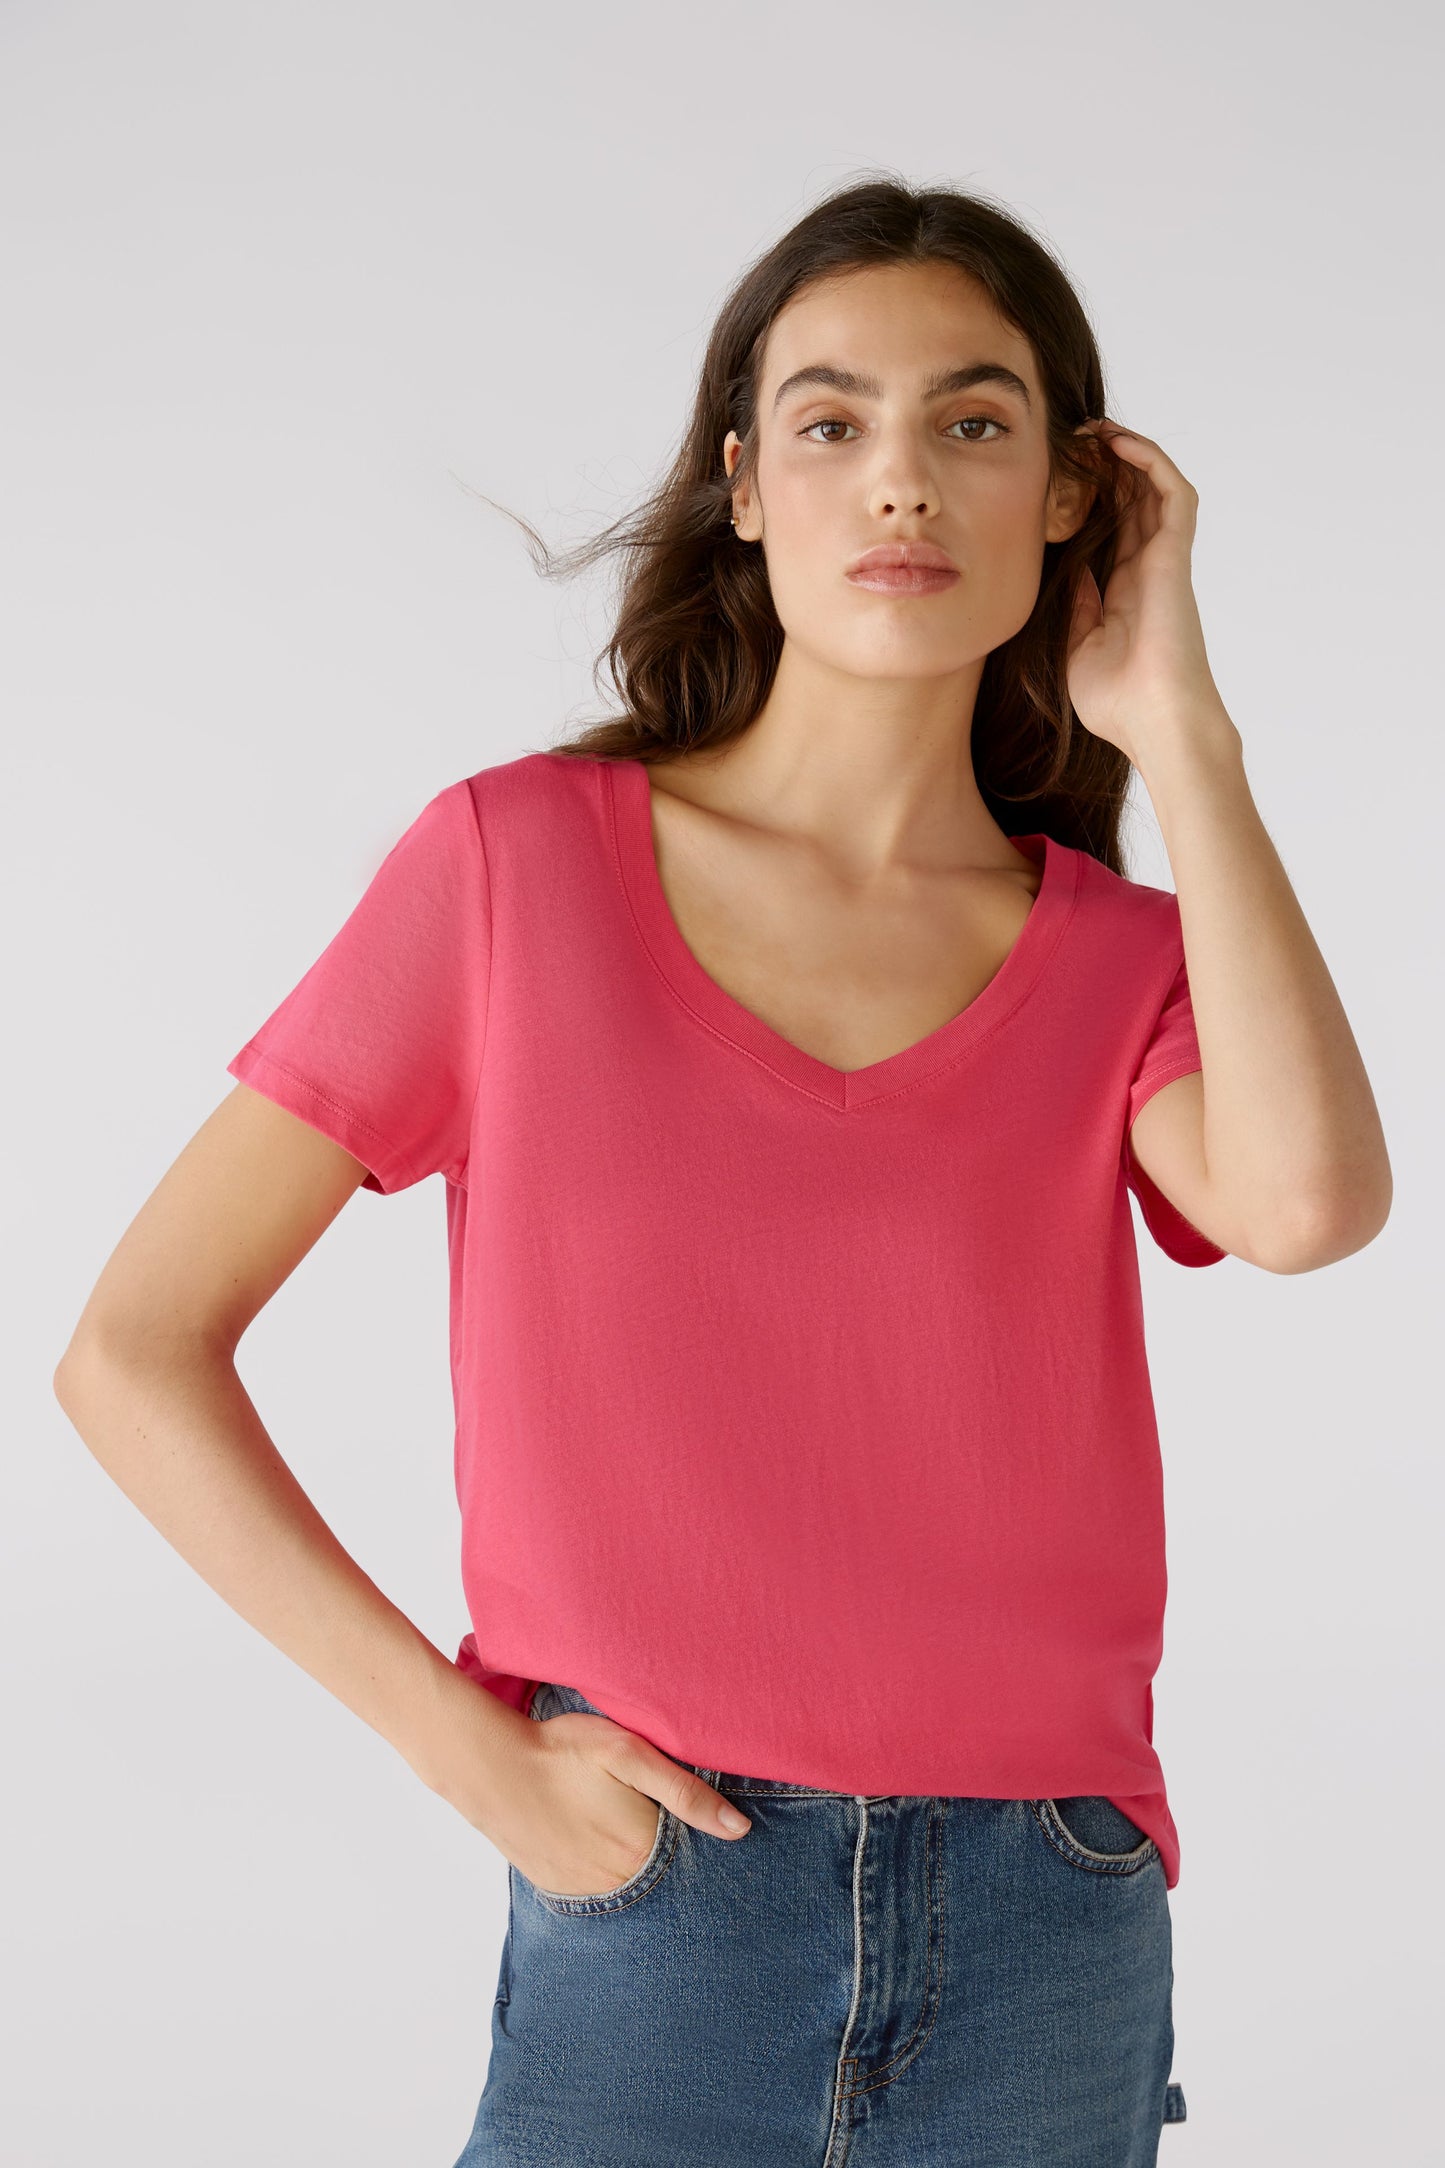 Oui Pink T-Shirt